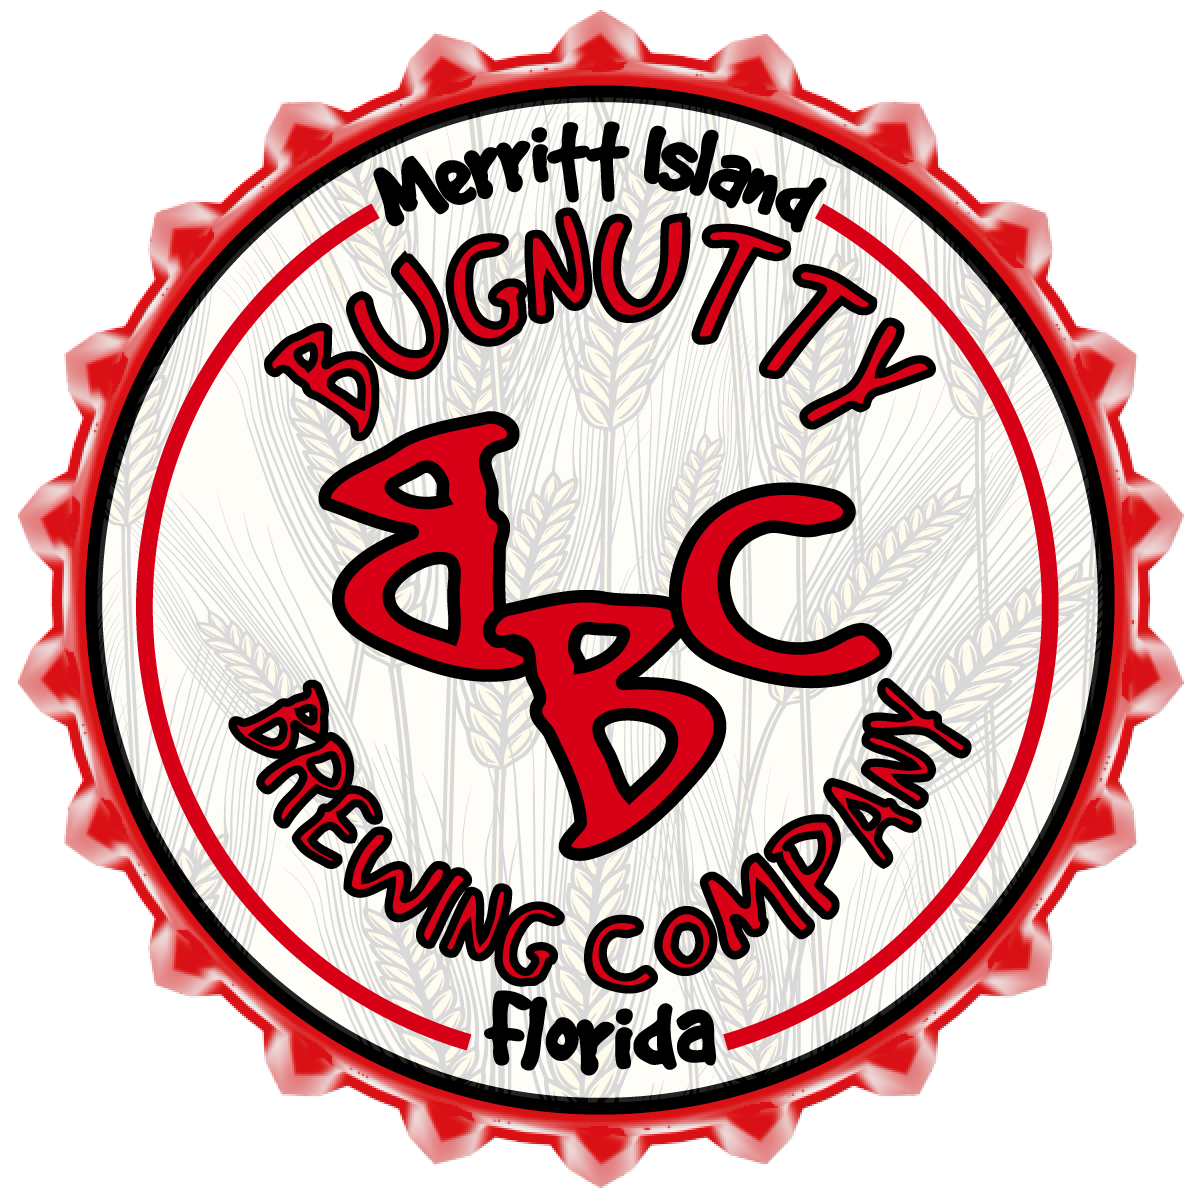 Pet Friendly Bugnutty Brewing Company in Merritt Island, FL